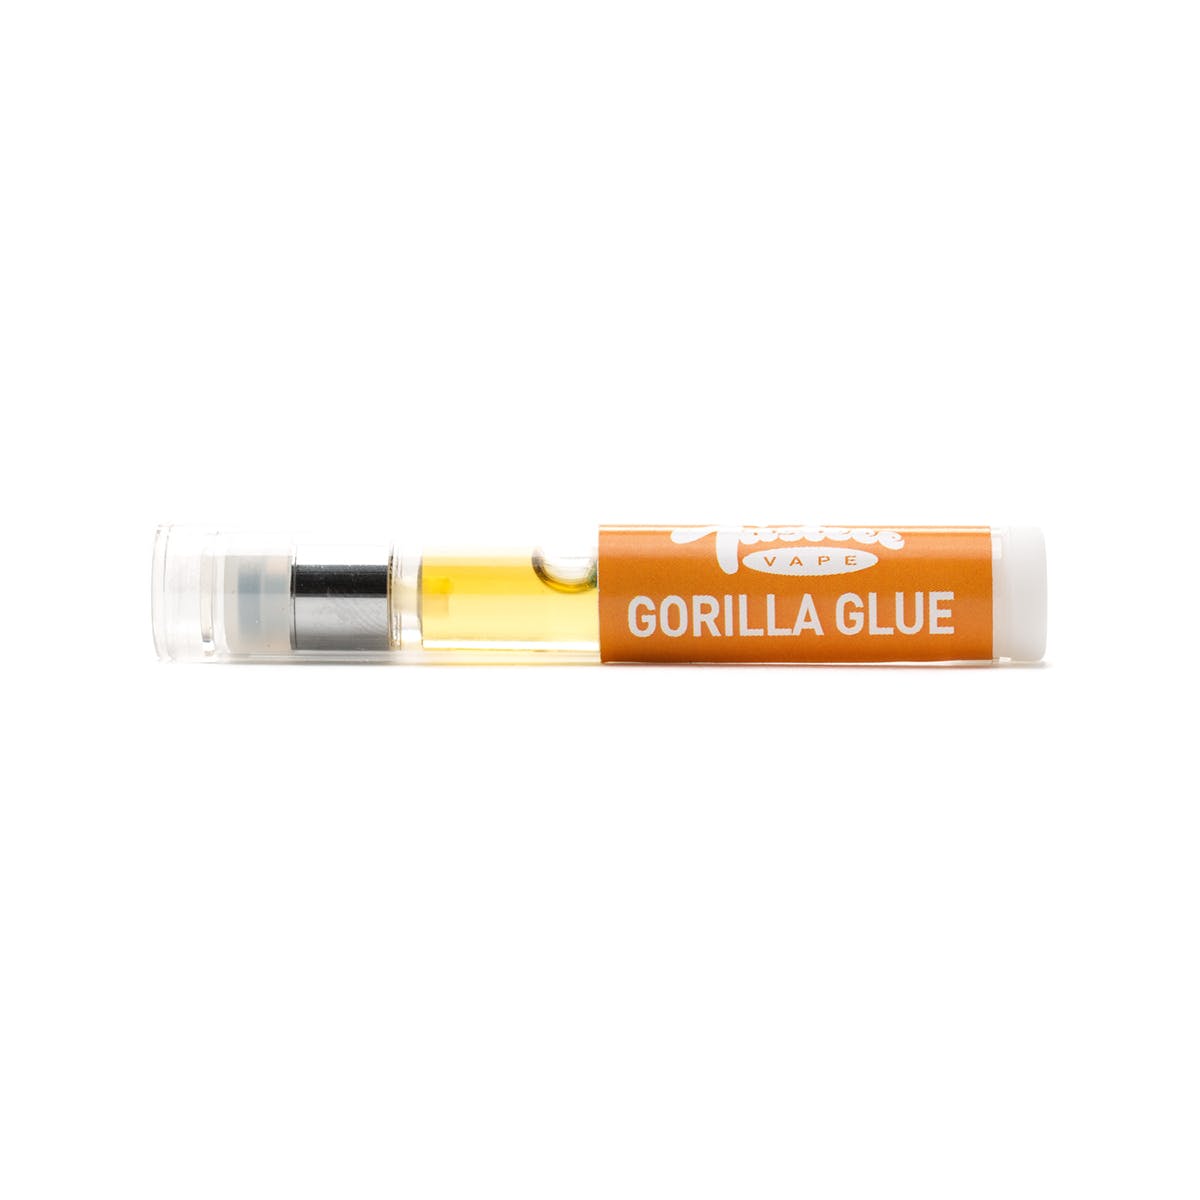 Gorilla Glue Tasteee Cartridge